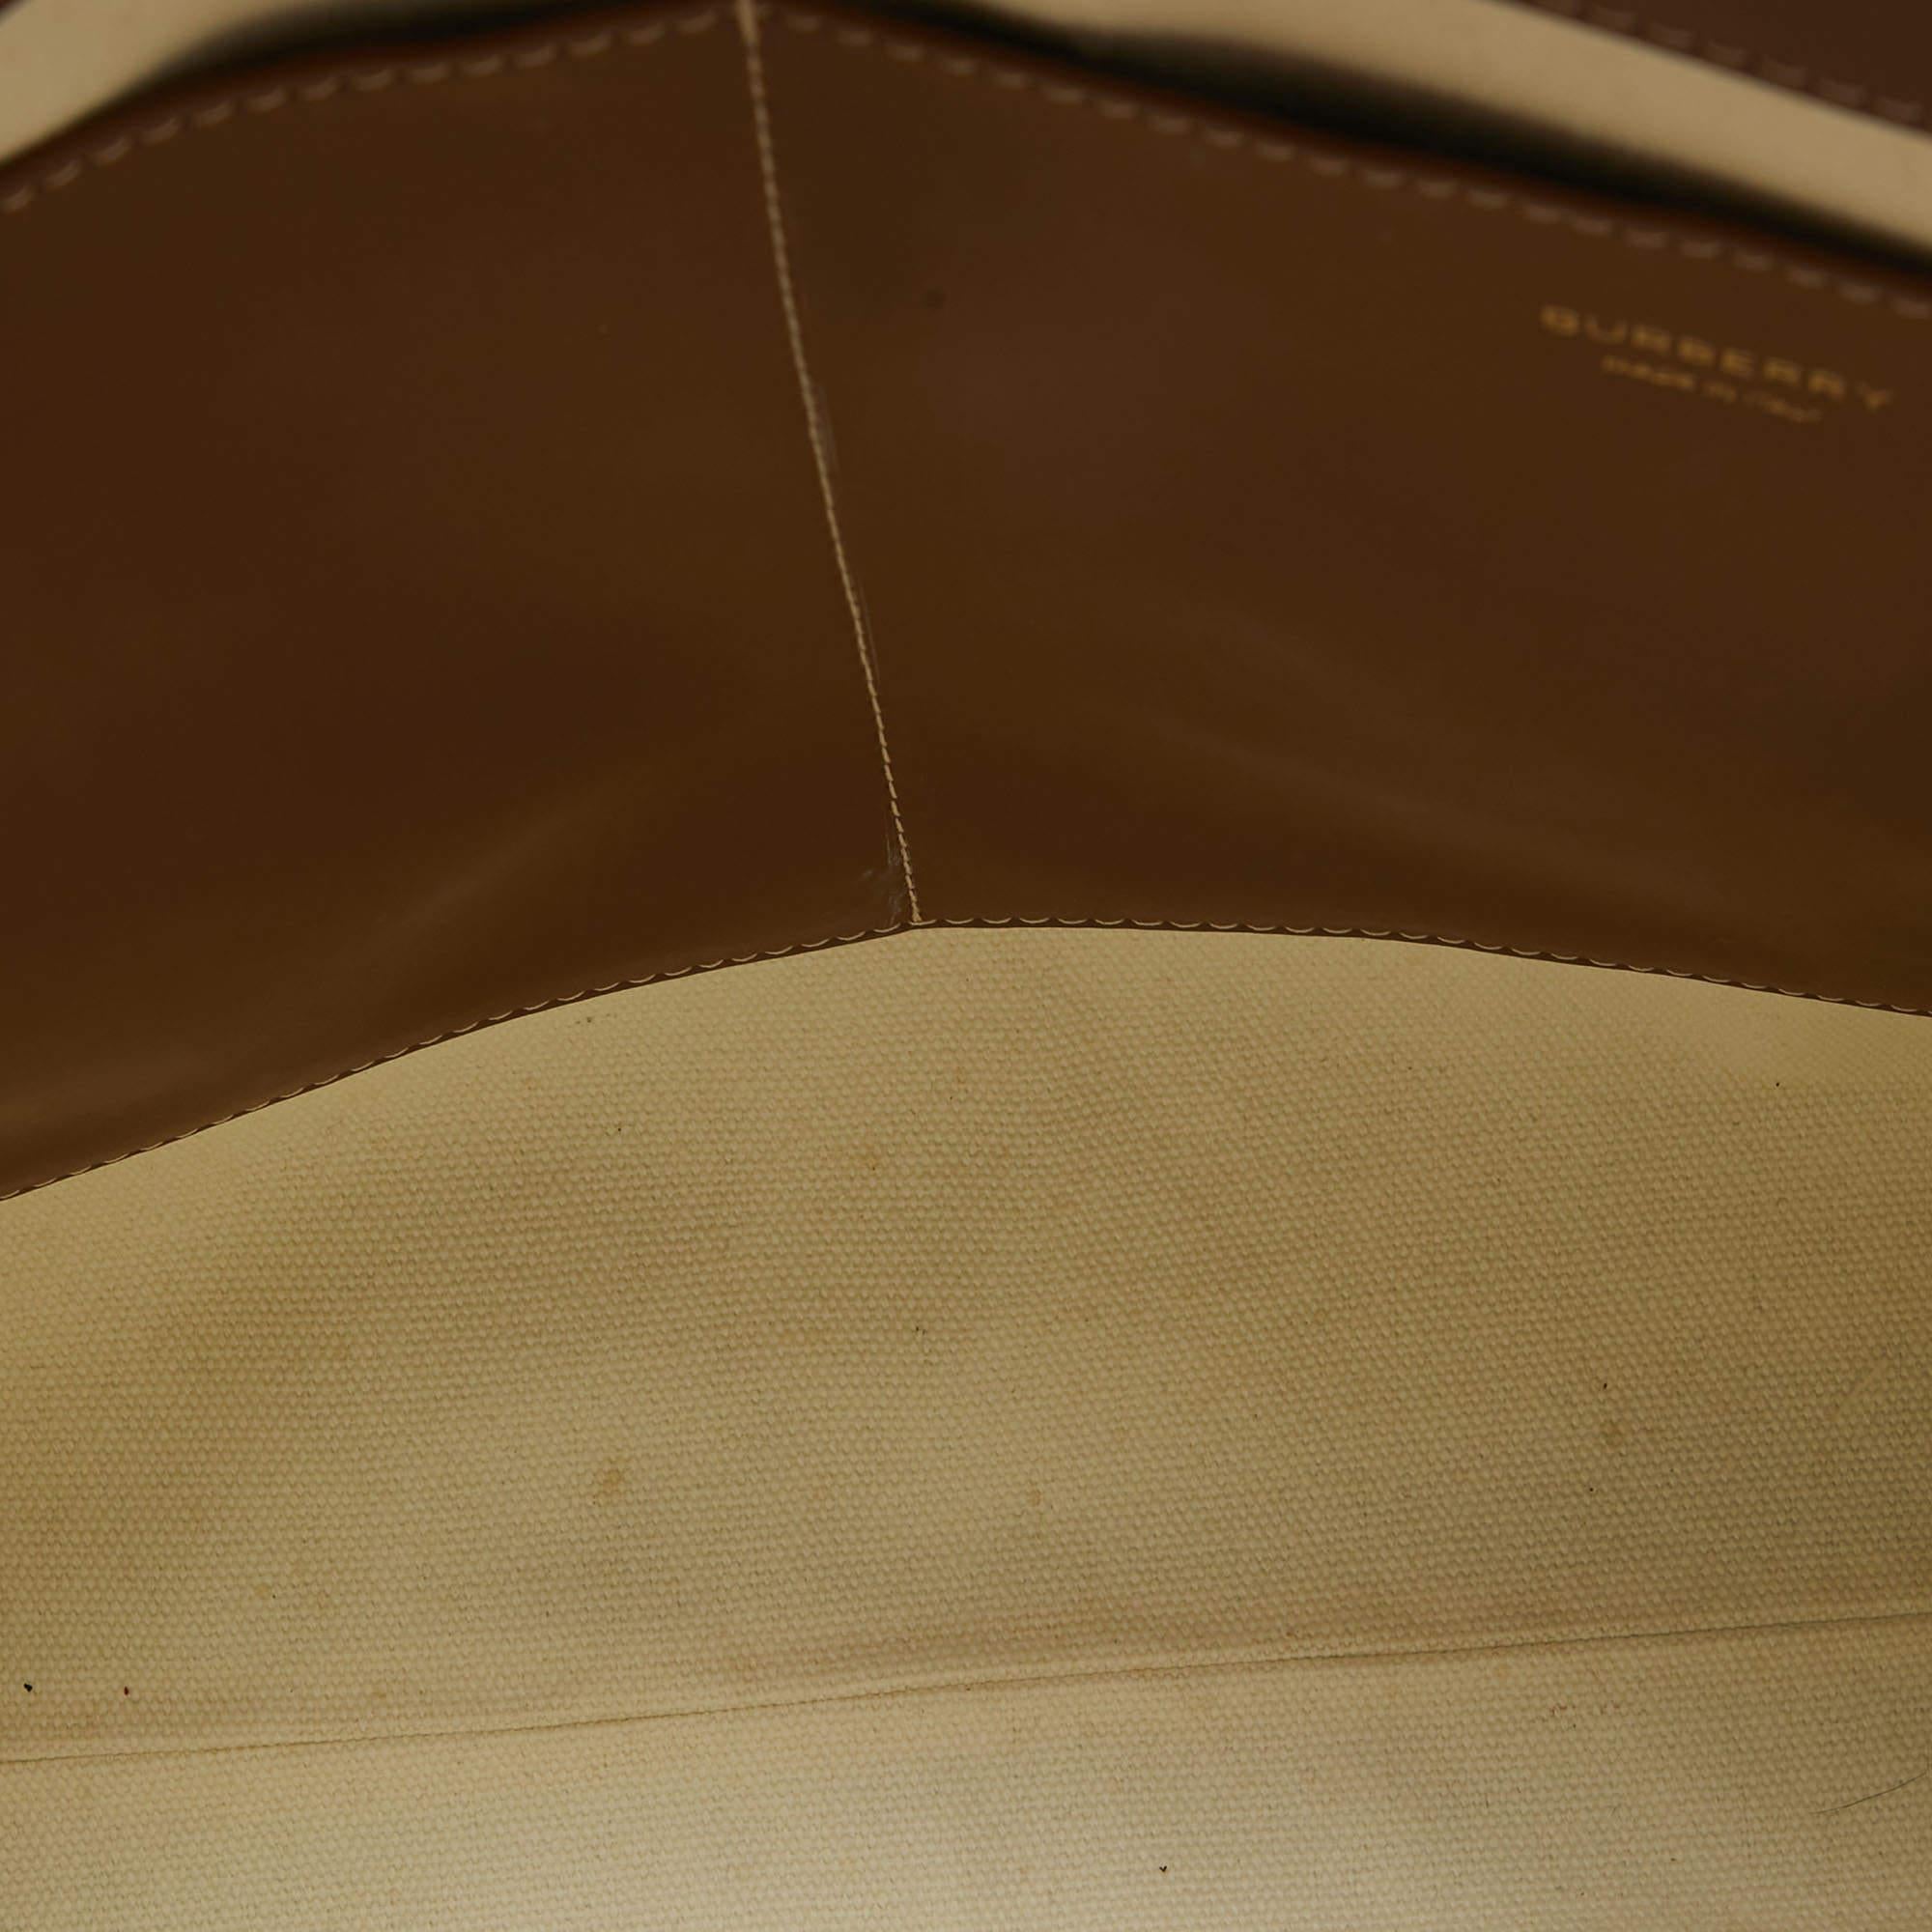 Burberry Dark Brown/Beige Canvas and Leather Medium Pocket Bag For Sale 5